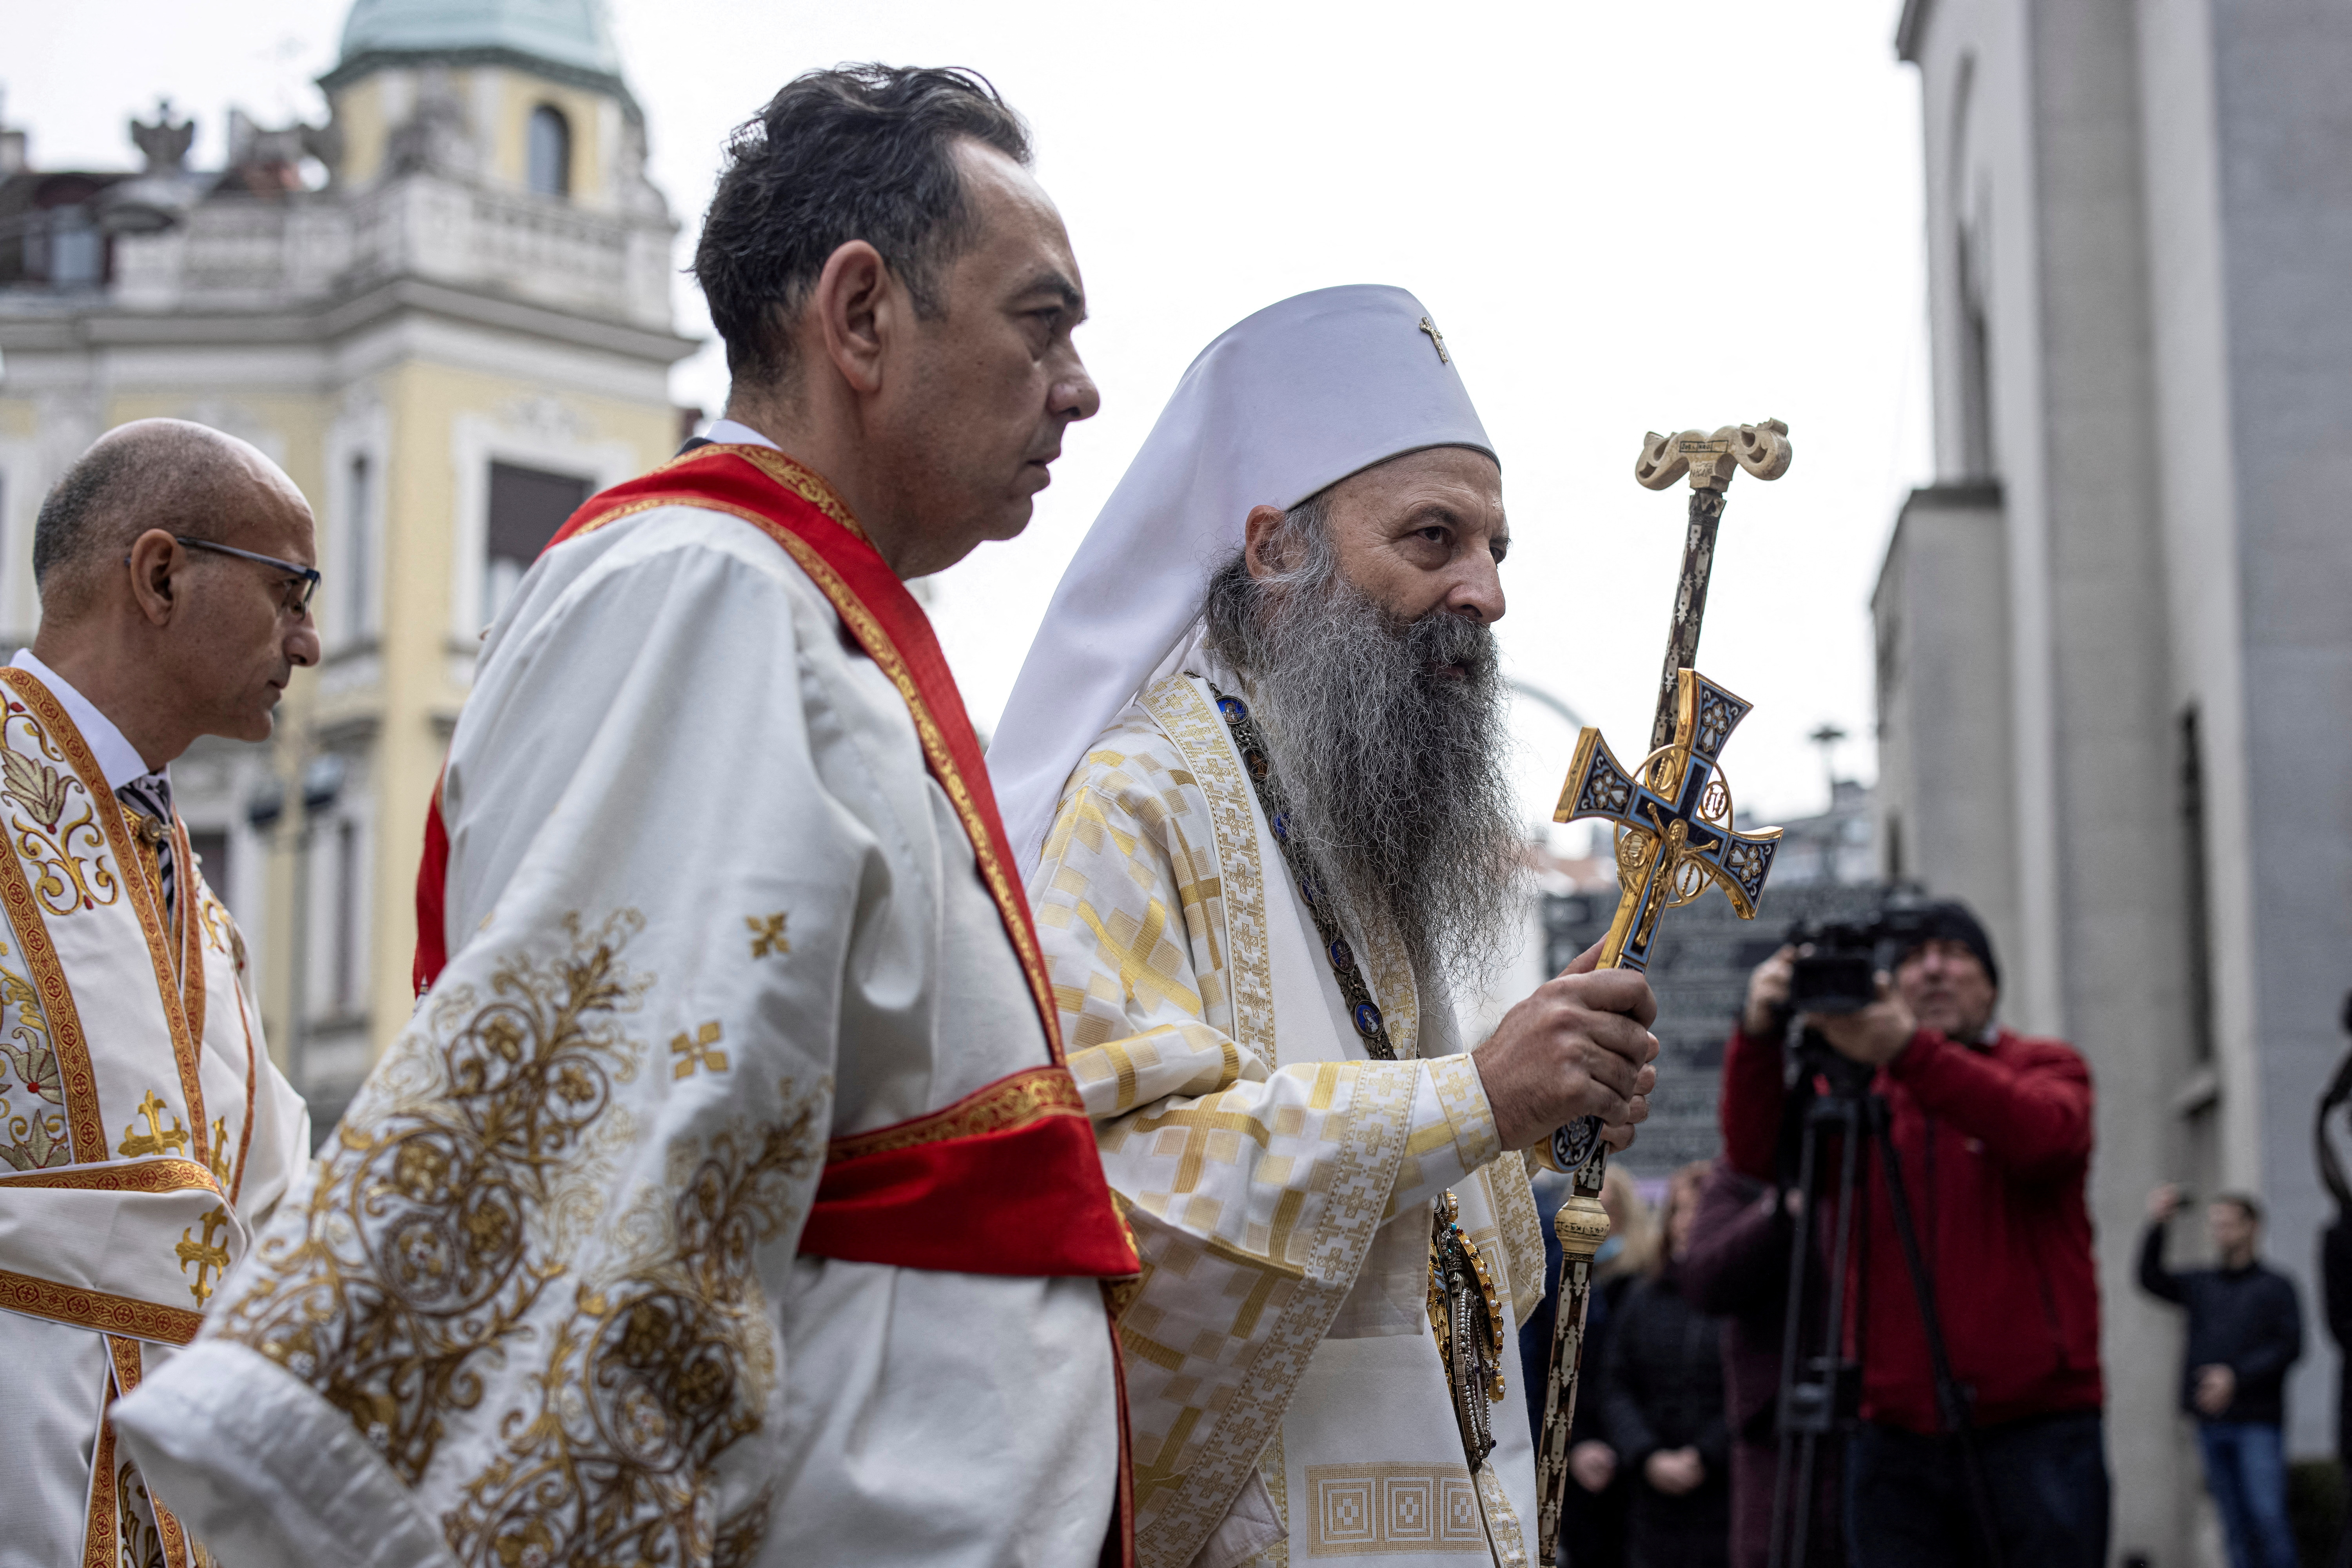 Serbian Orthodox Church enthrones its new Patriarch